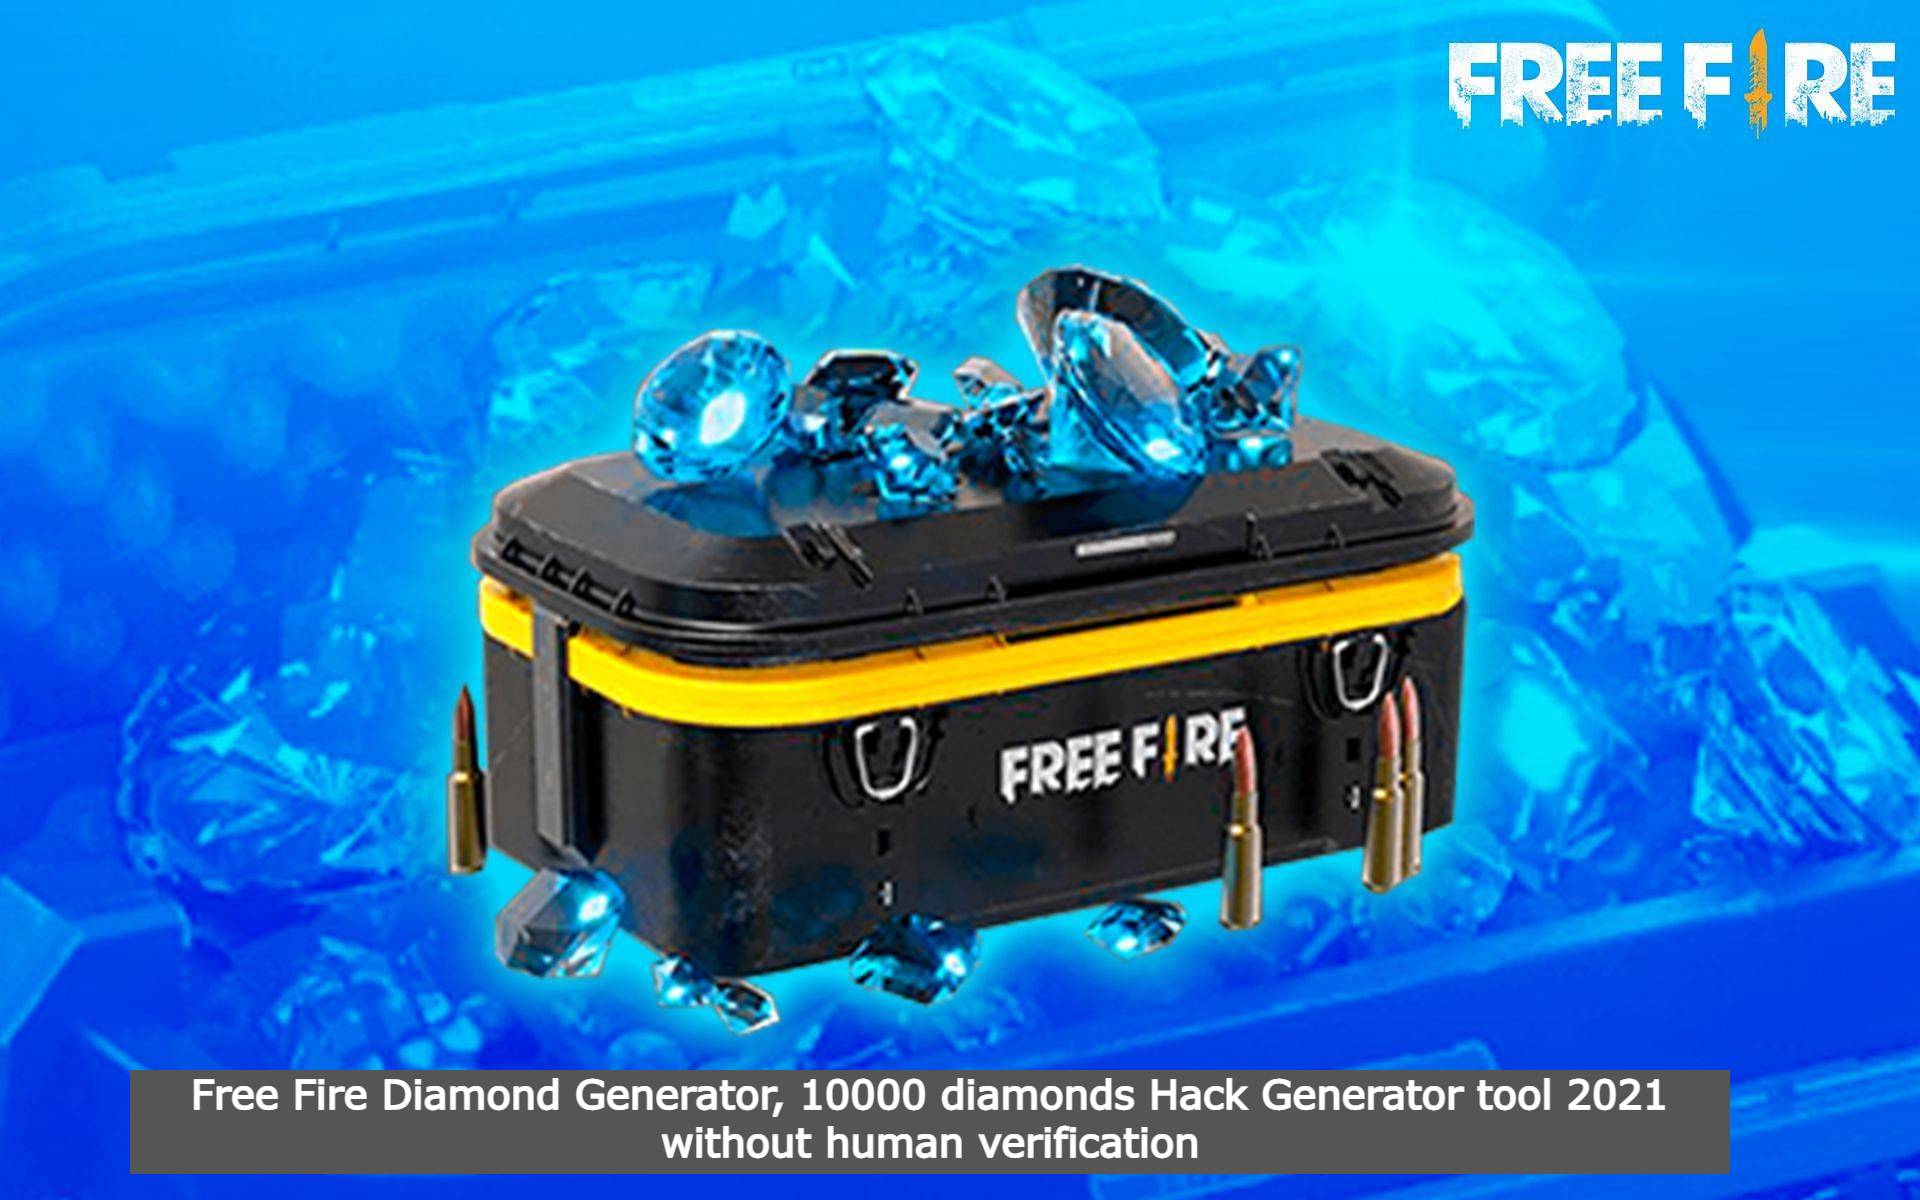 Free Fire Diamond Generator, 10000 diamonds Hack Generator tool 2021 without human verification